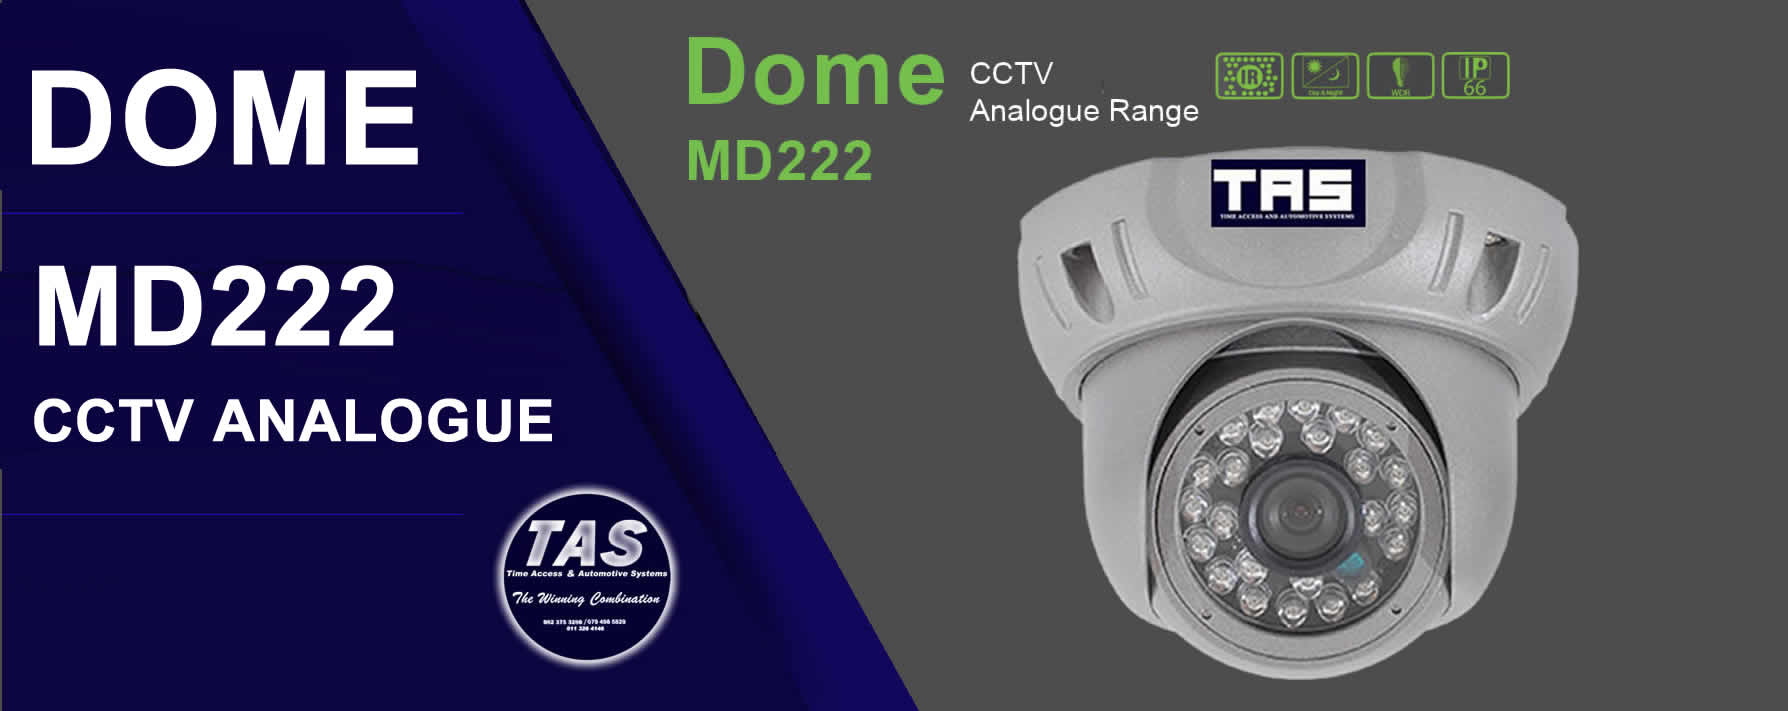 dot4-SIR288-analogue-CCTV-Cameras-security-control-banner